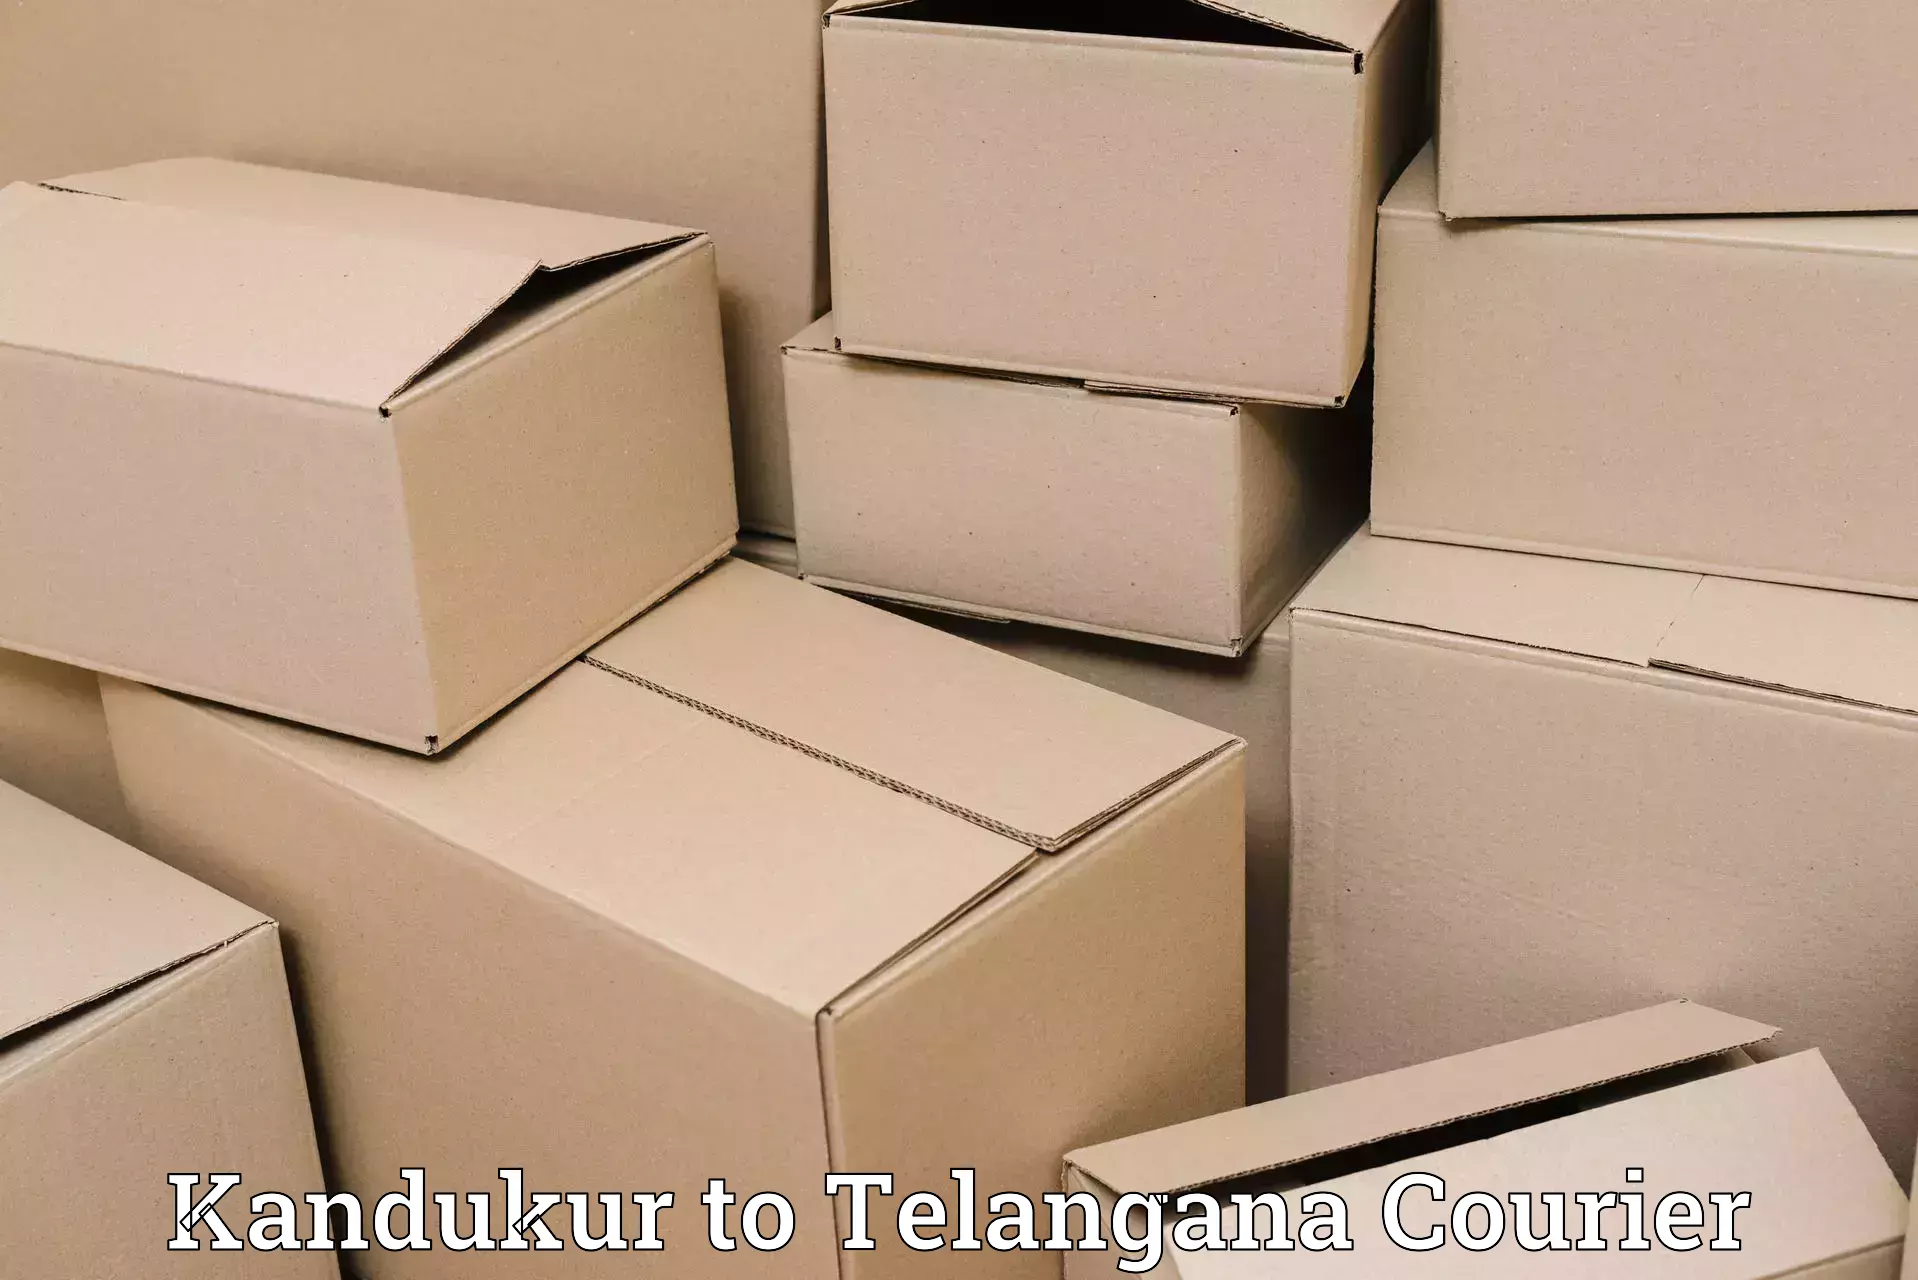 Seamless shipping experience Kandukur to Chevella